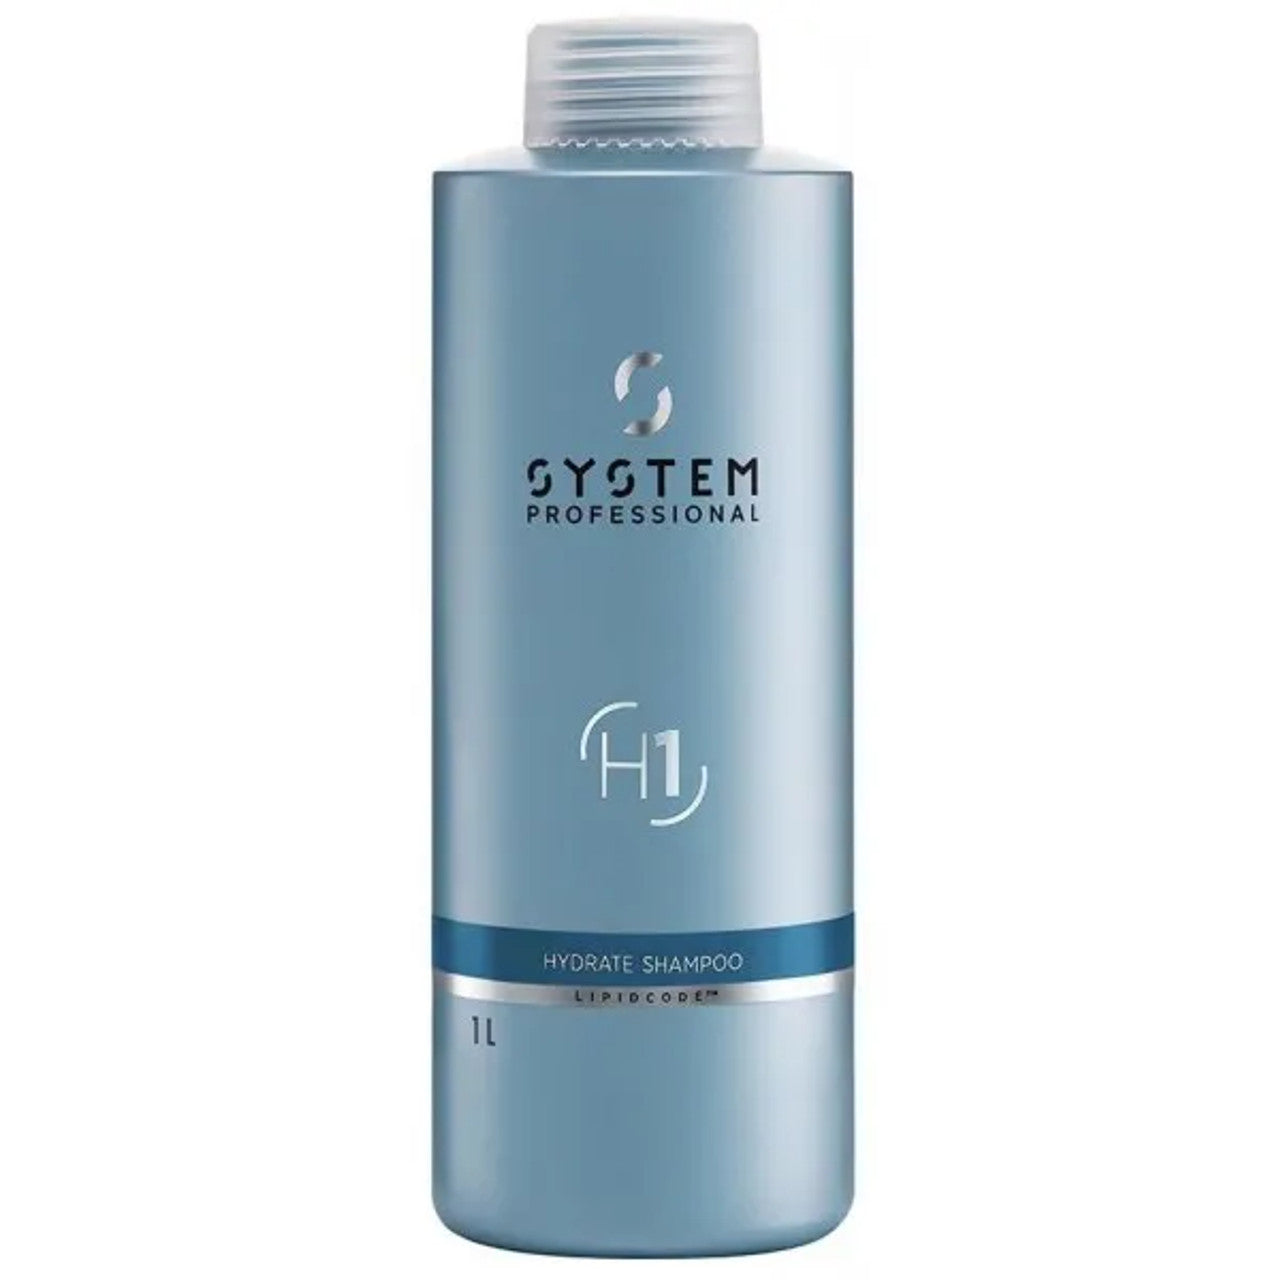 SYSTEM PROFESSIONAL - Hydrate Shampoo 1000ml